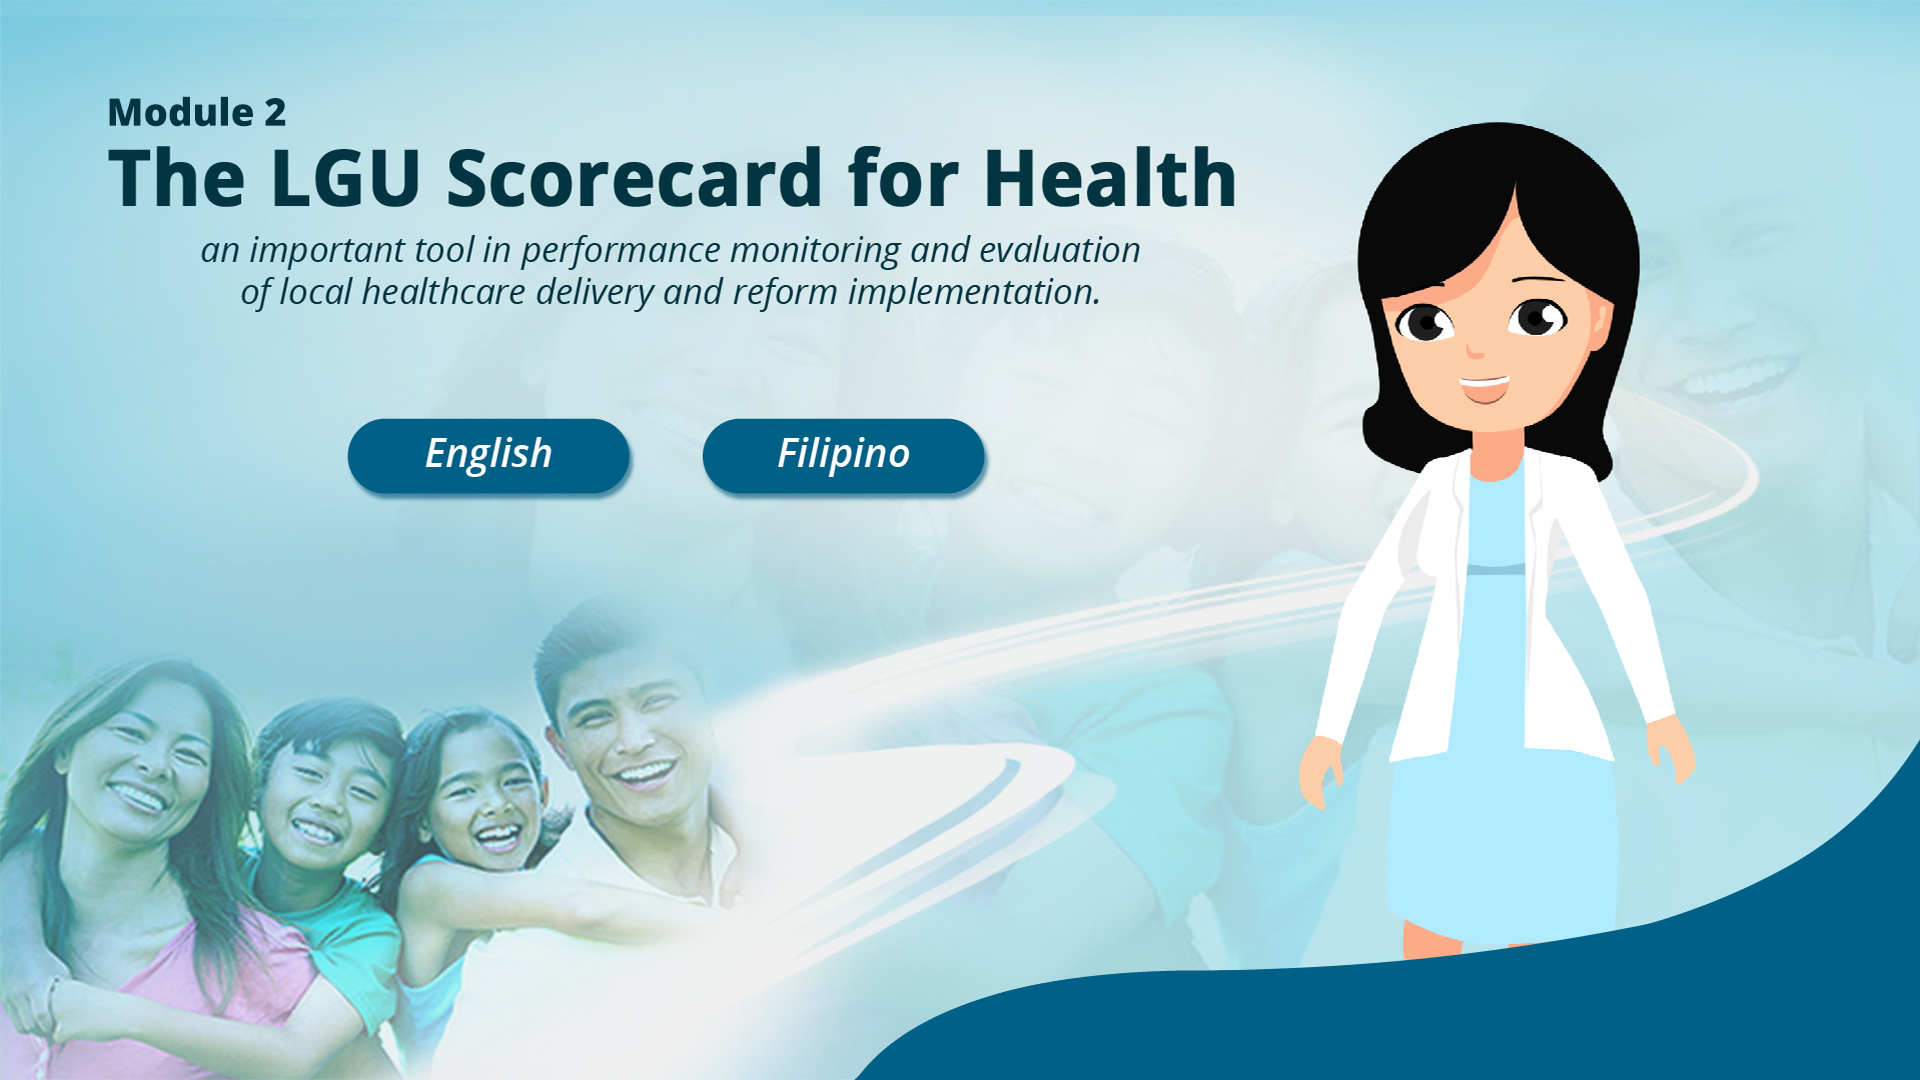 The LGU Scorecard for Health